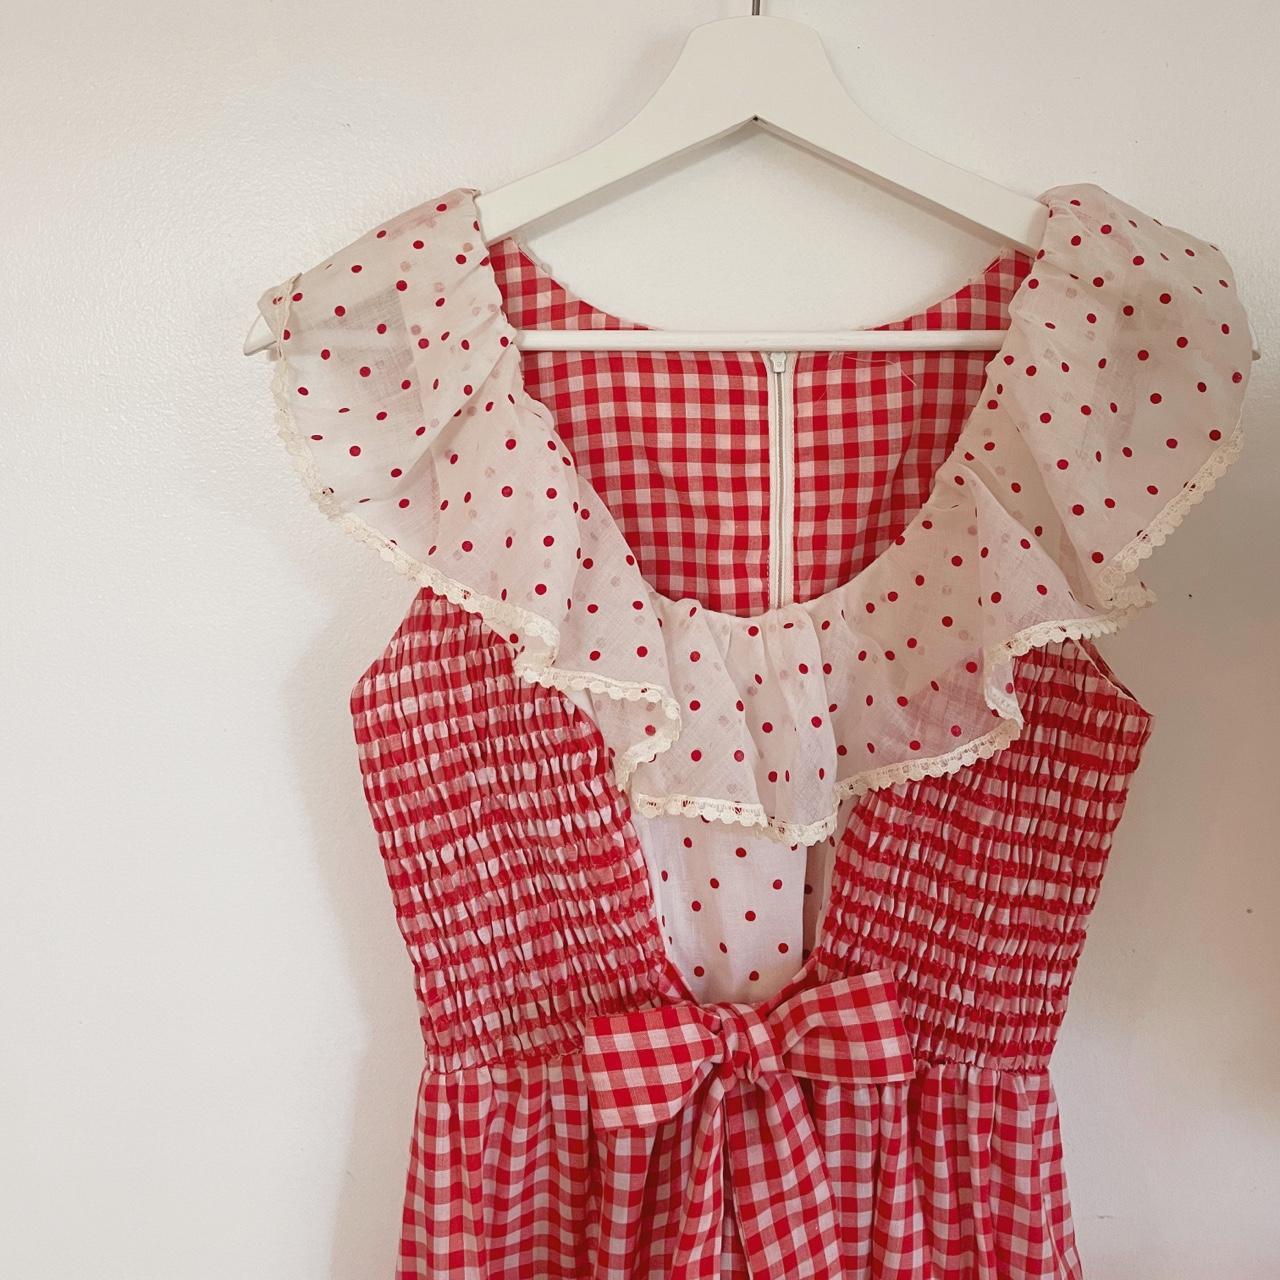 70s polka dot detailed picnic checkered dress 🍒♥️ I... - Depop